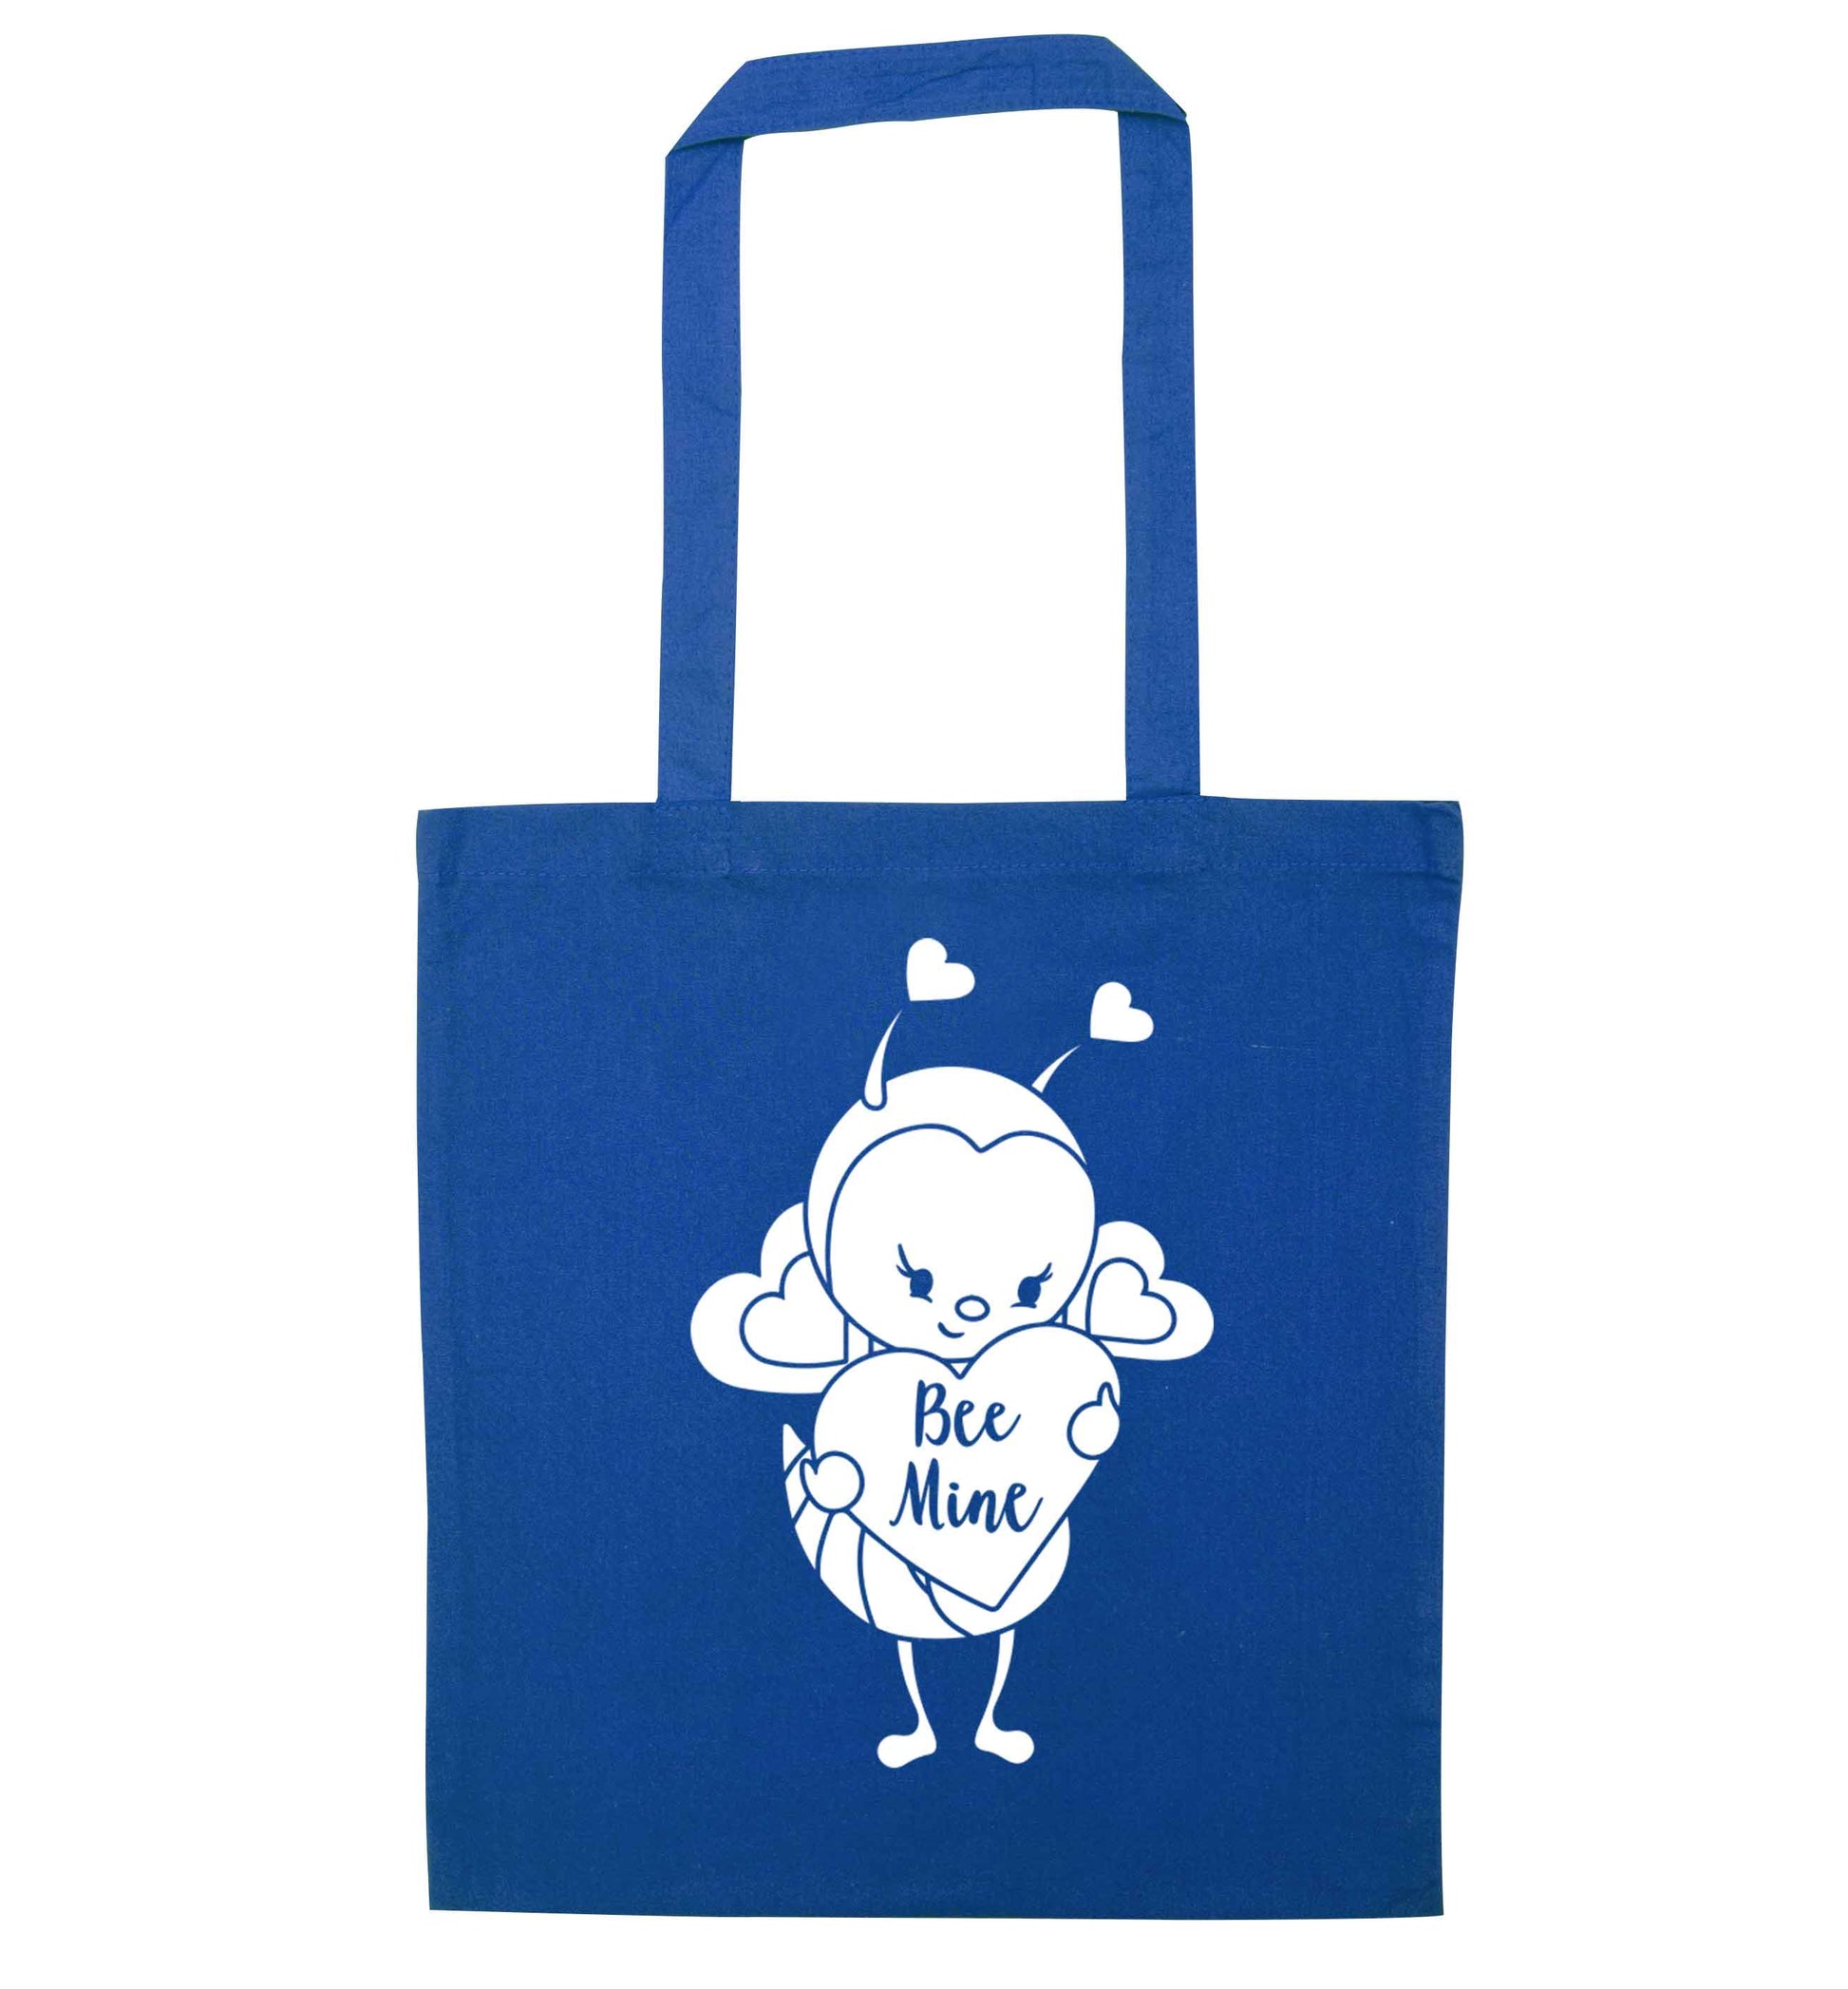 Bee mine blue tote bag